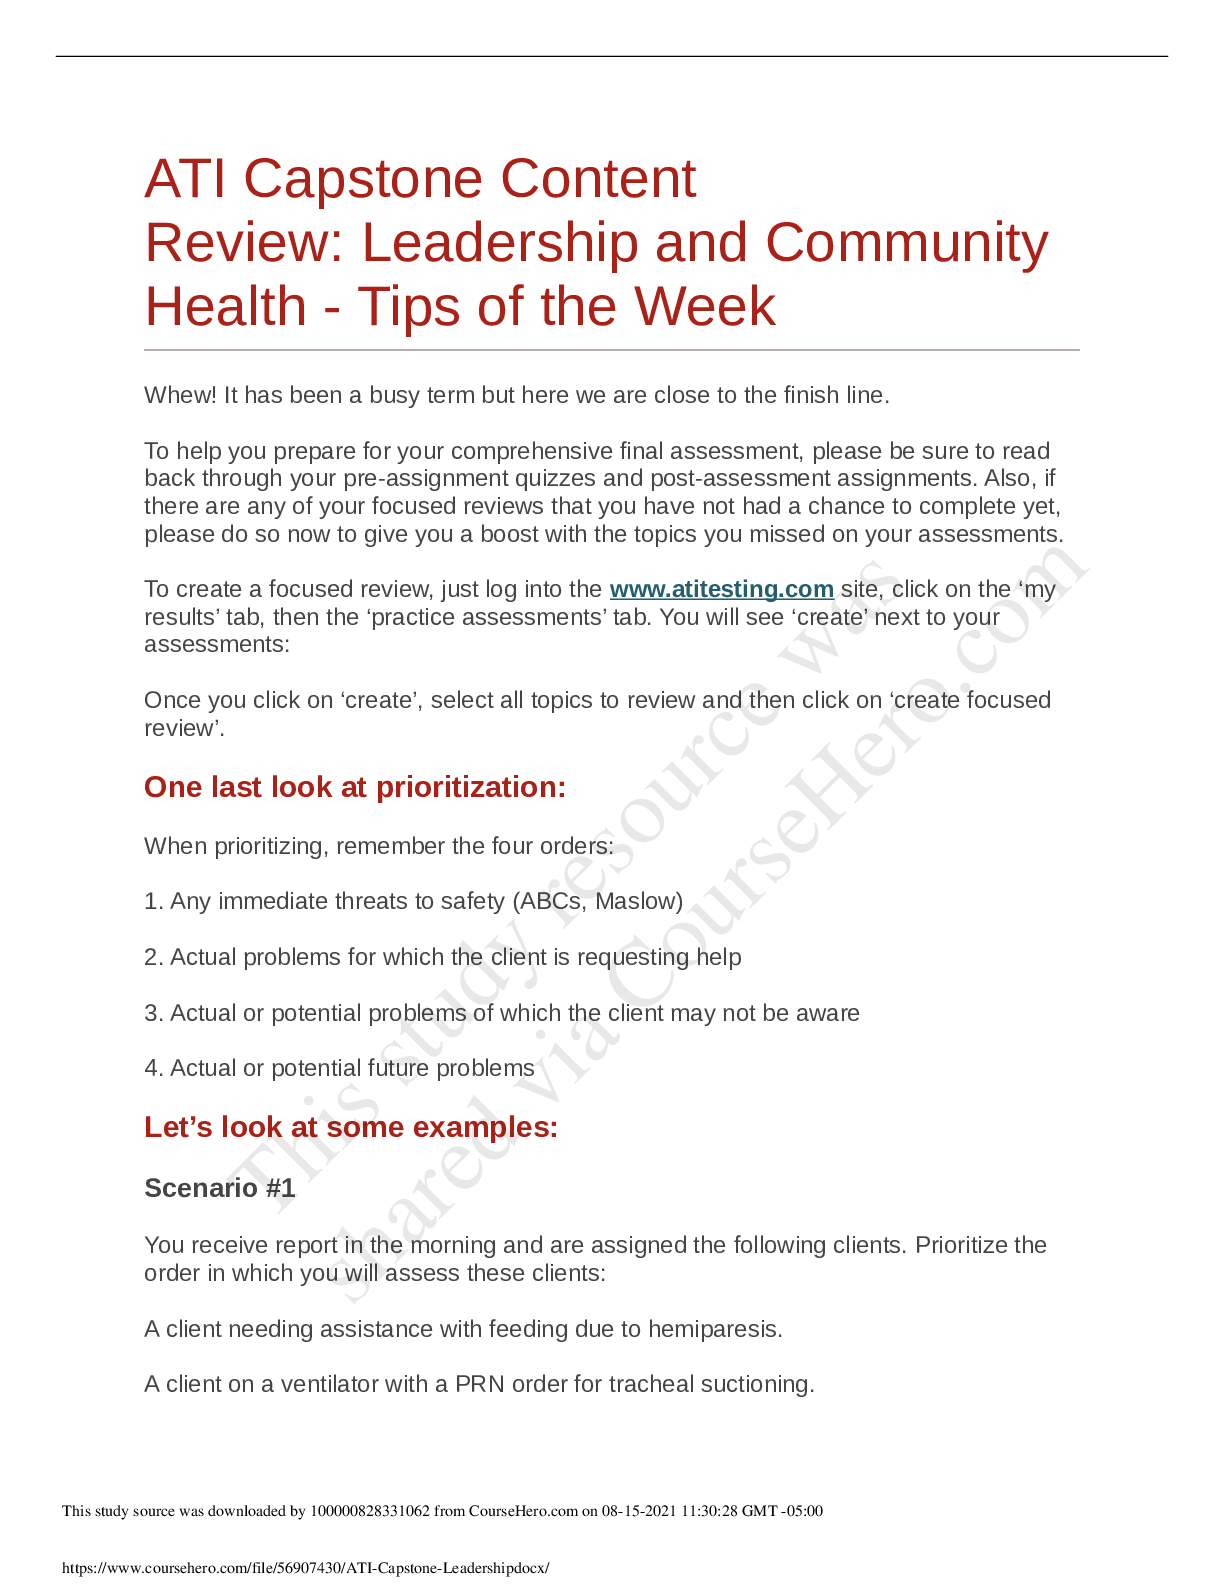 ati capstone leadership post assessment assignment